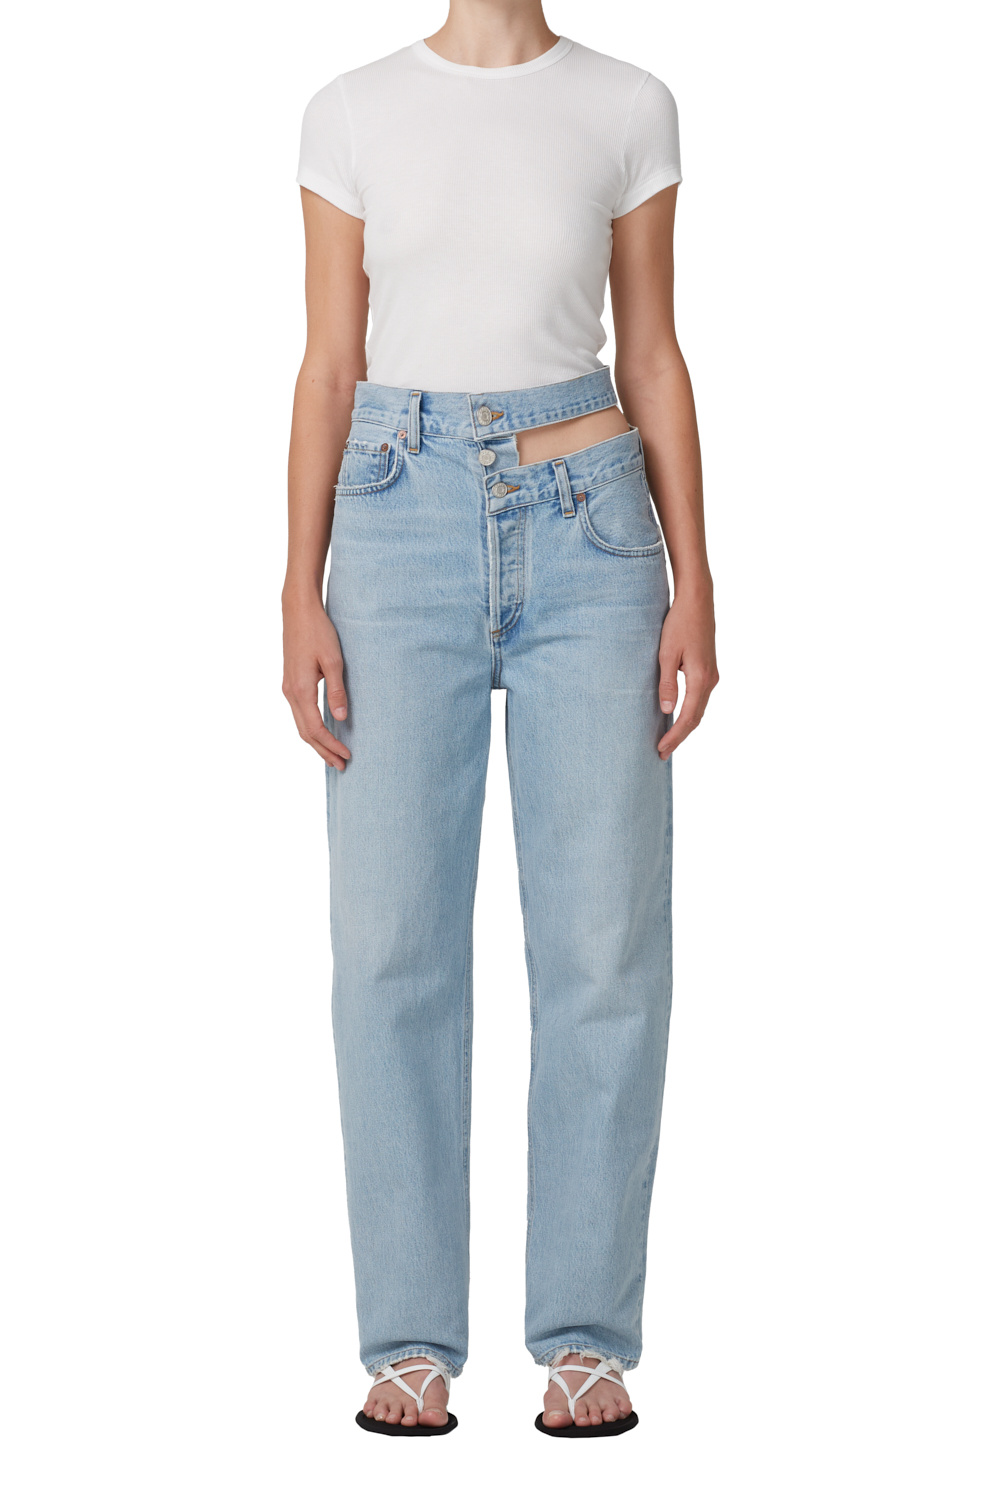 Broken Waistband Jeans - Stella Dallas Boutique